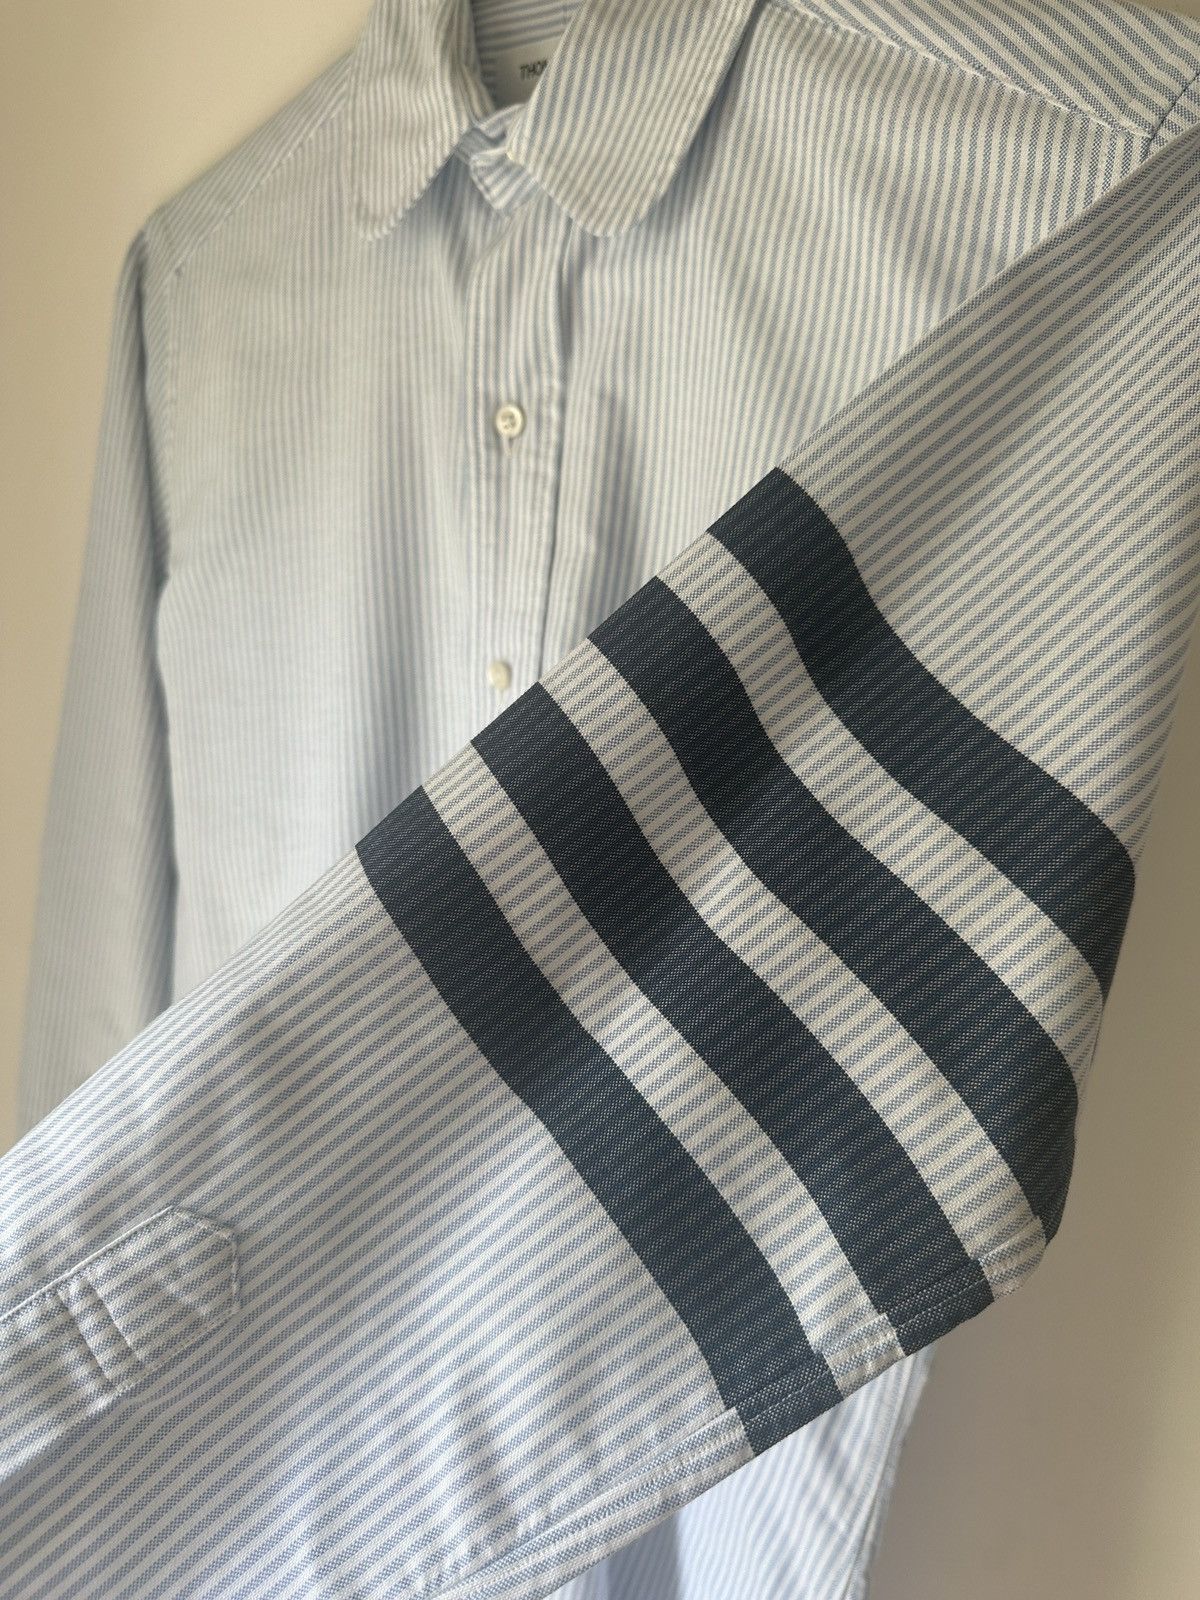 SS2017 Thom Browne Classic Blue 4 Bar Stripe Oxford Shirt - 4